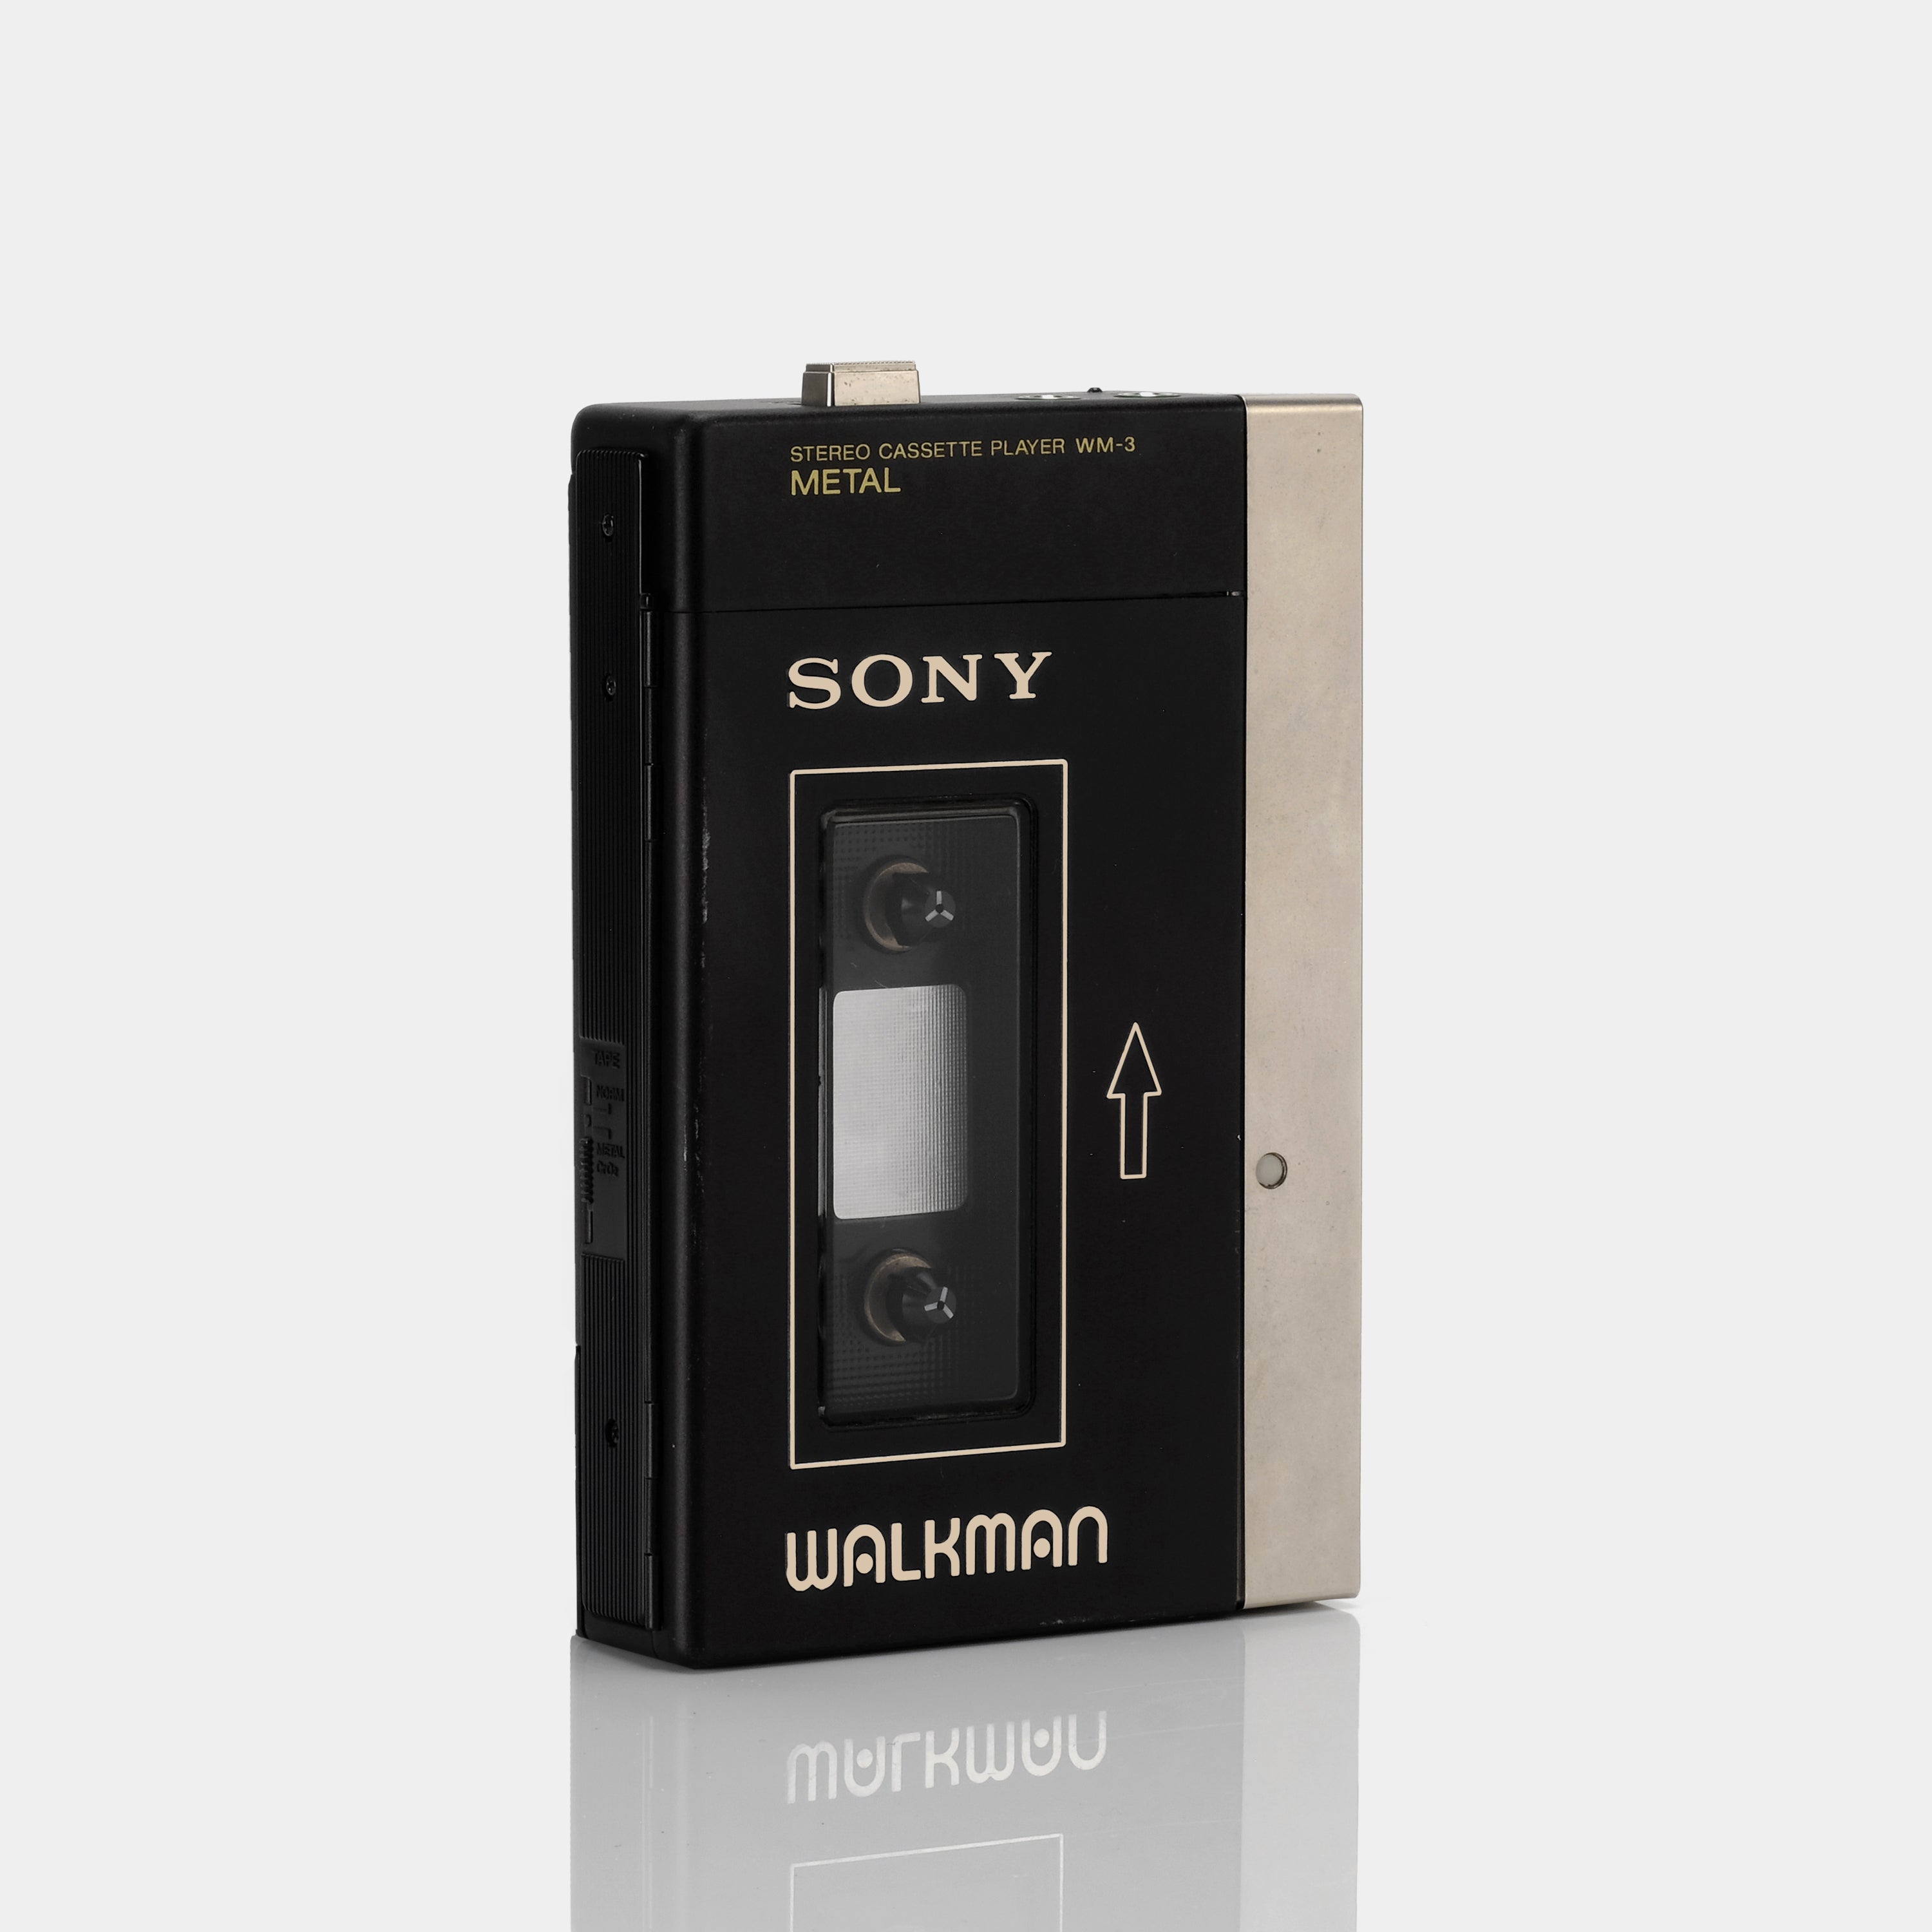 Sony Walkman WM-3 Portable Cassette Player